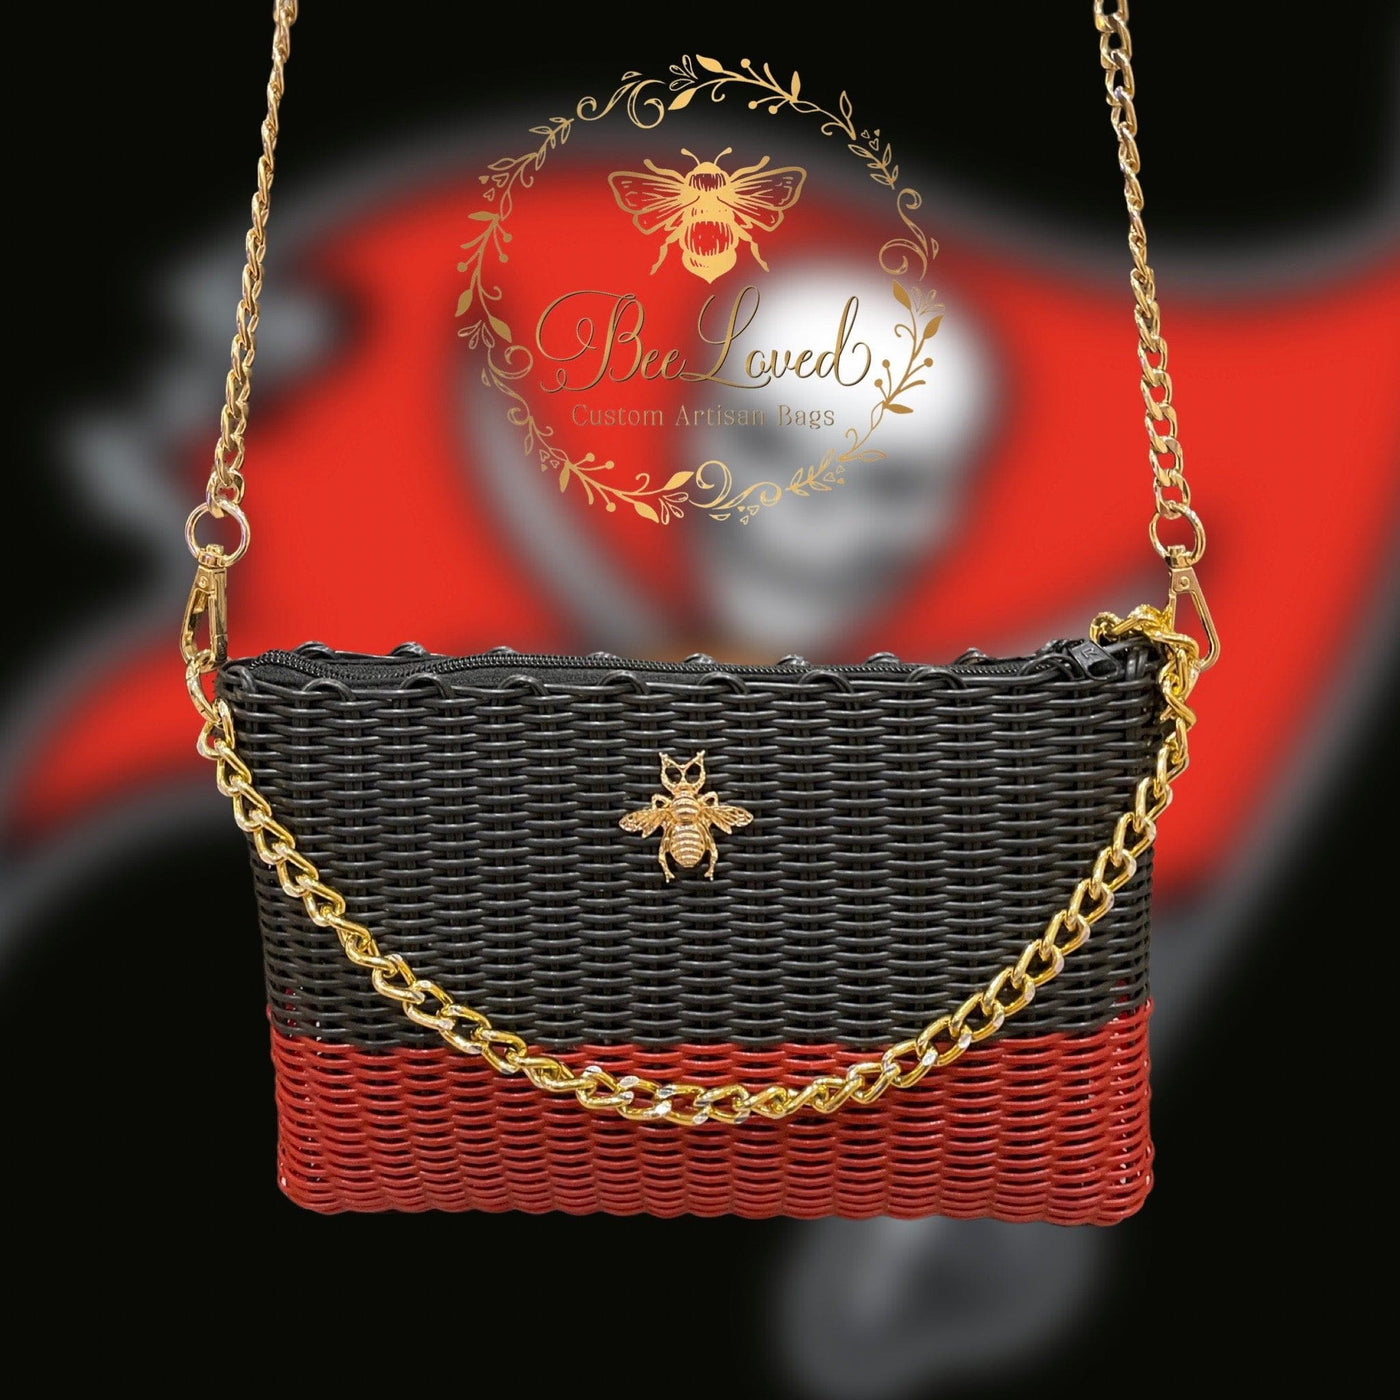 BeeLoved Custom Artisan Bags and Gifts Handbags Medium / Crossbody Gold Buccaneer Crossbody/Clutch Bag